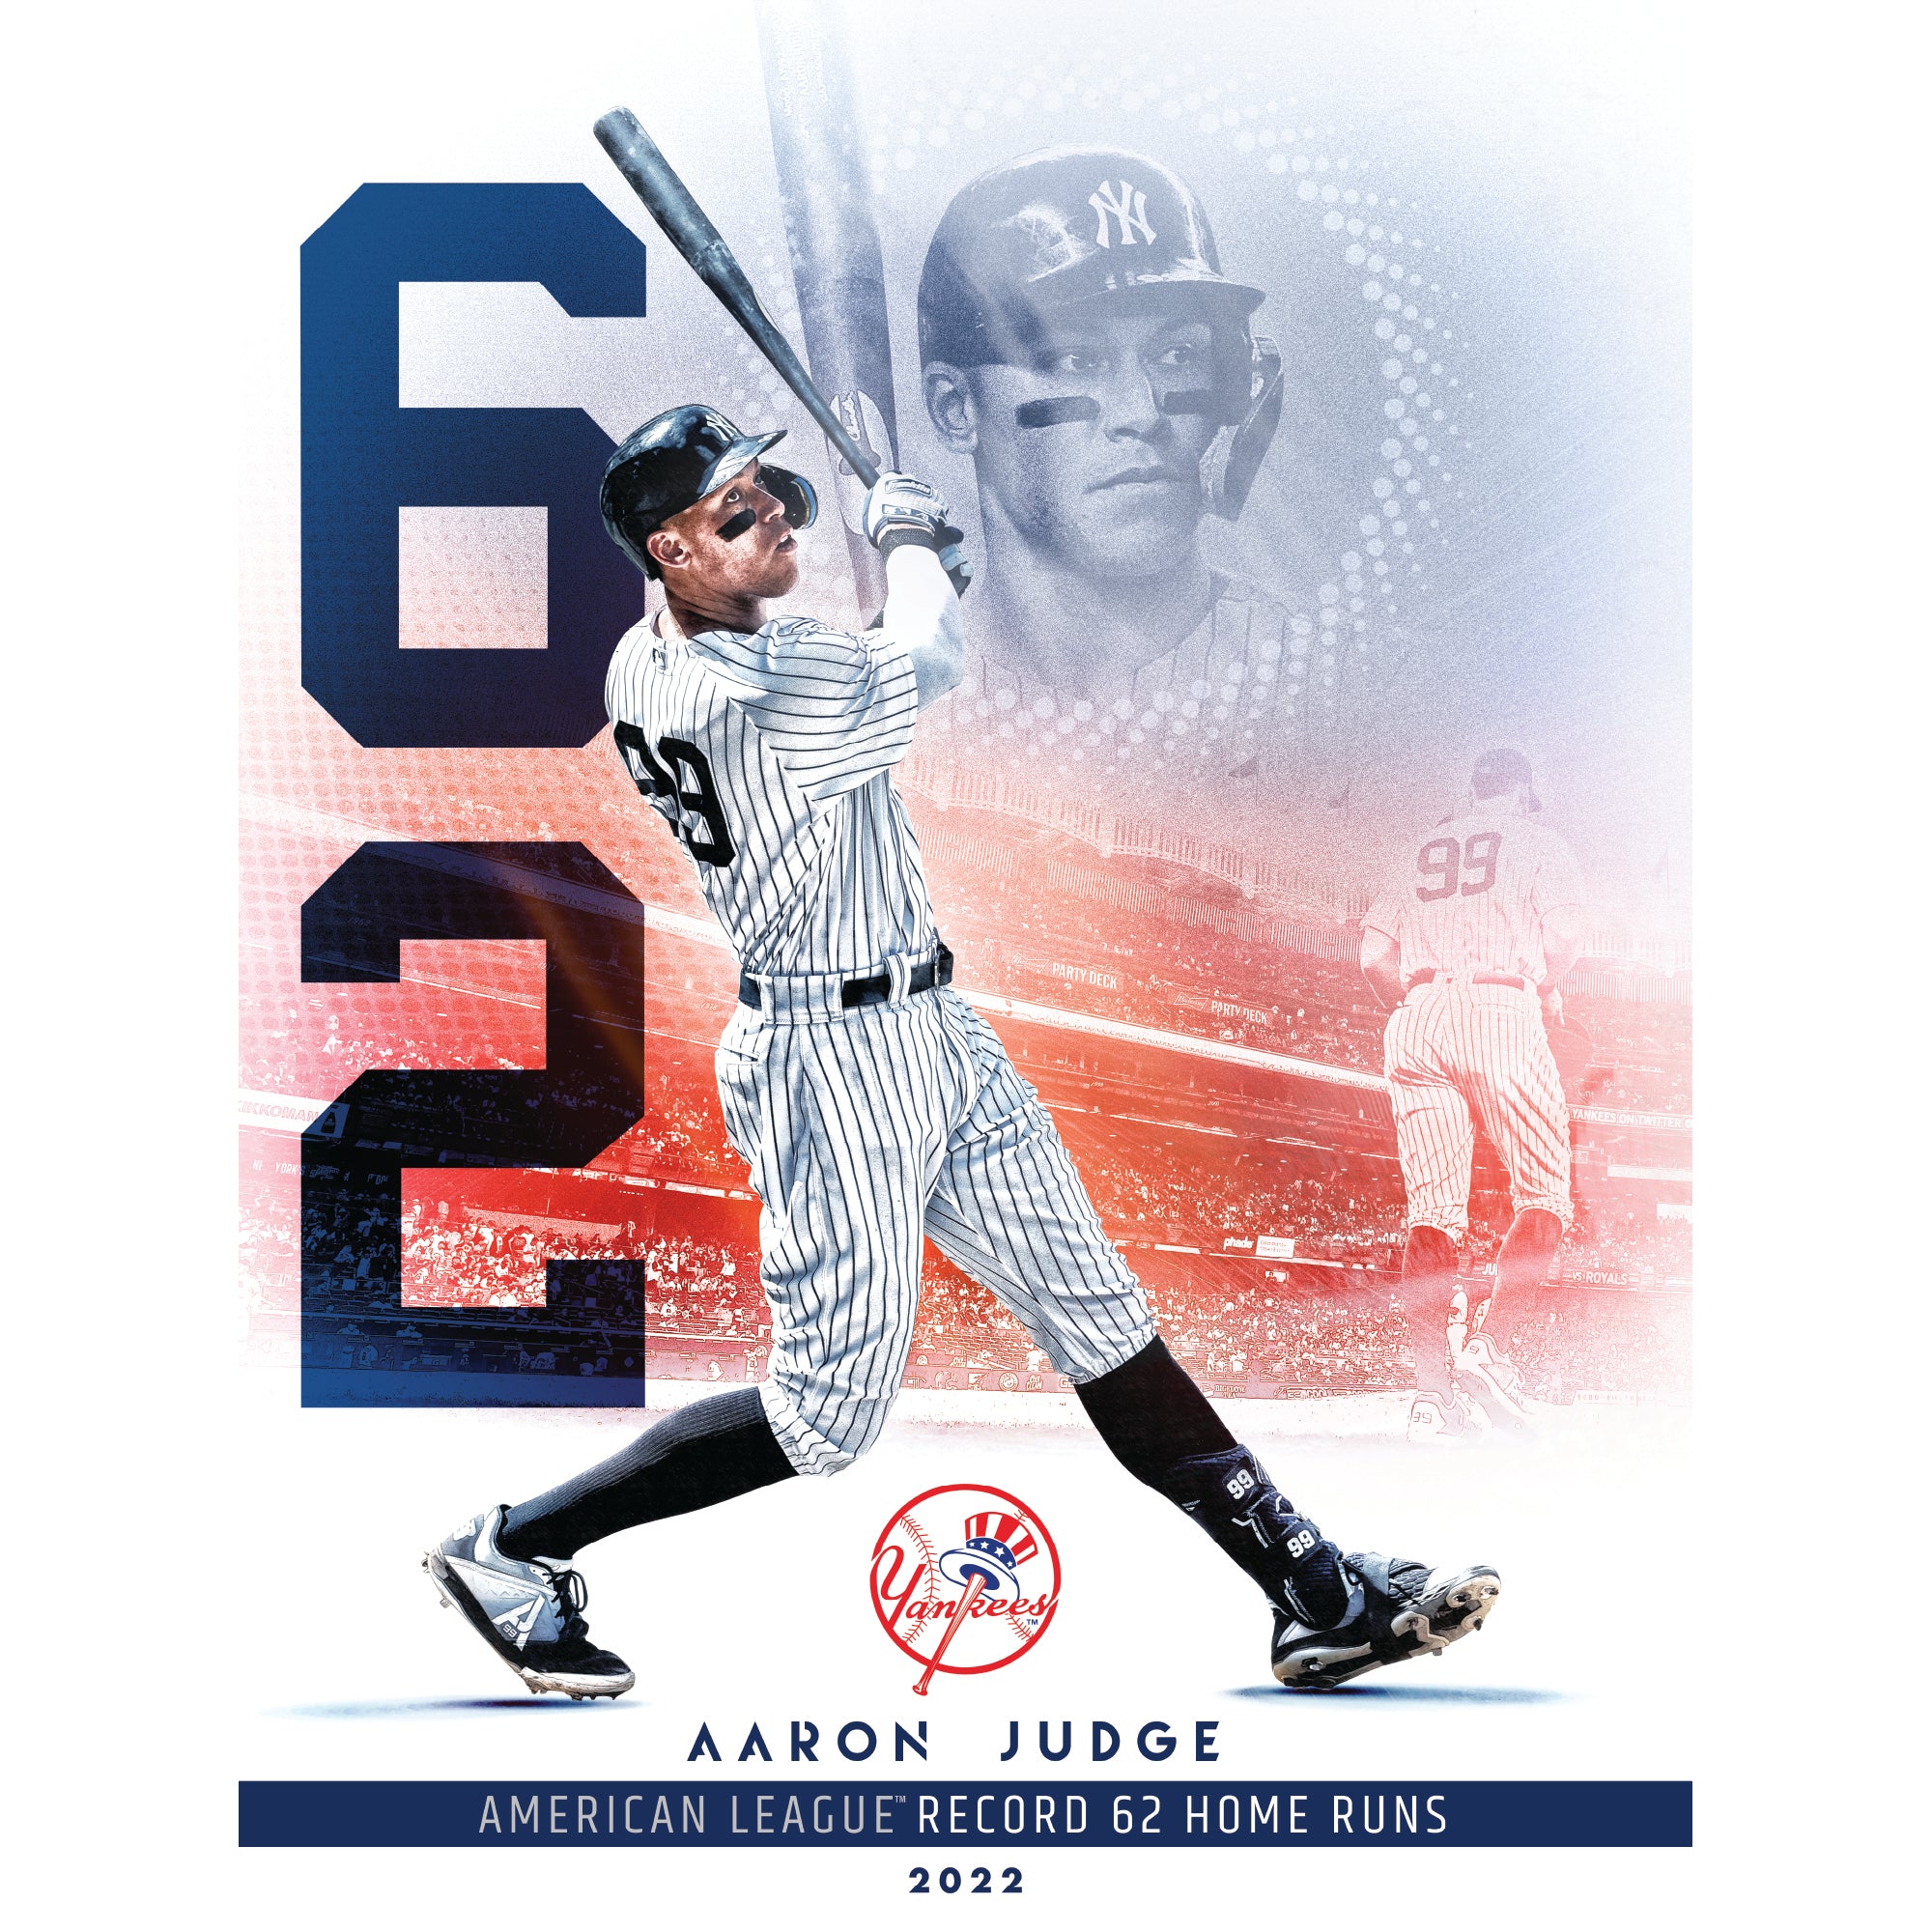 New York Yankees: Aaron Judge 2022 American League Home Run Record